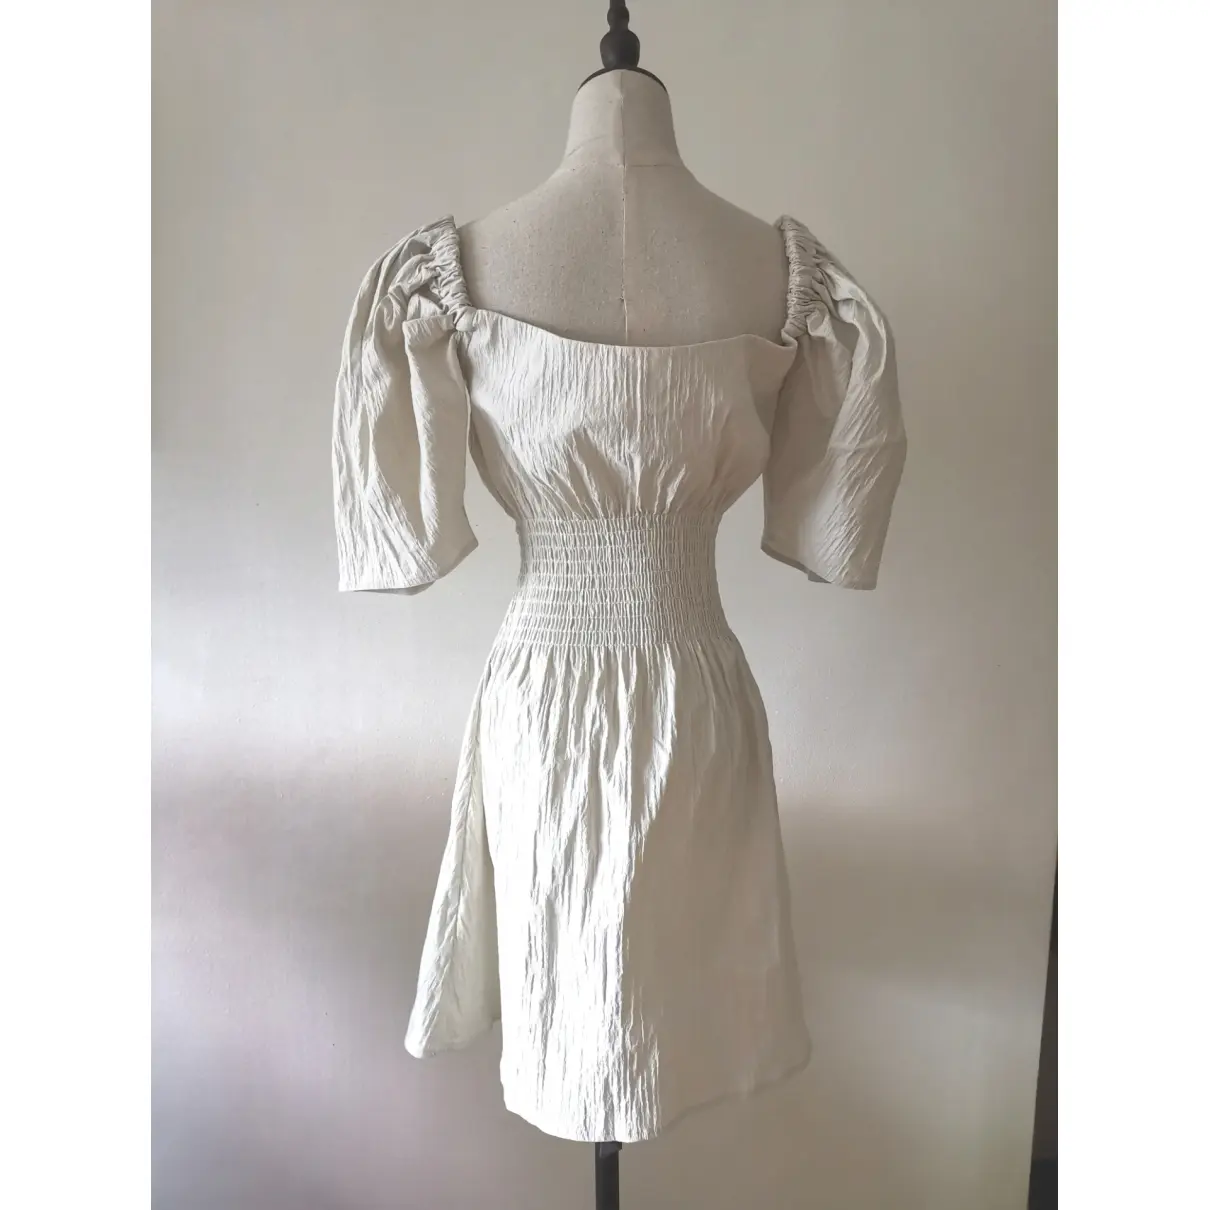 Buy Anna Quan Mini dress online